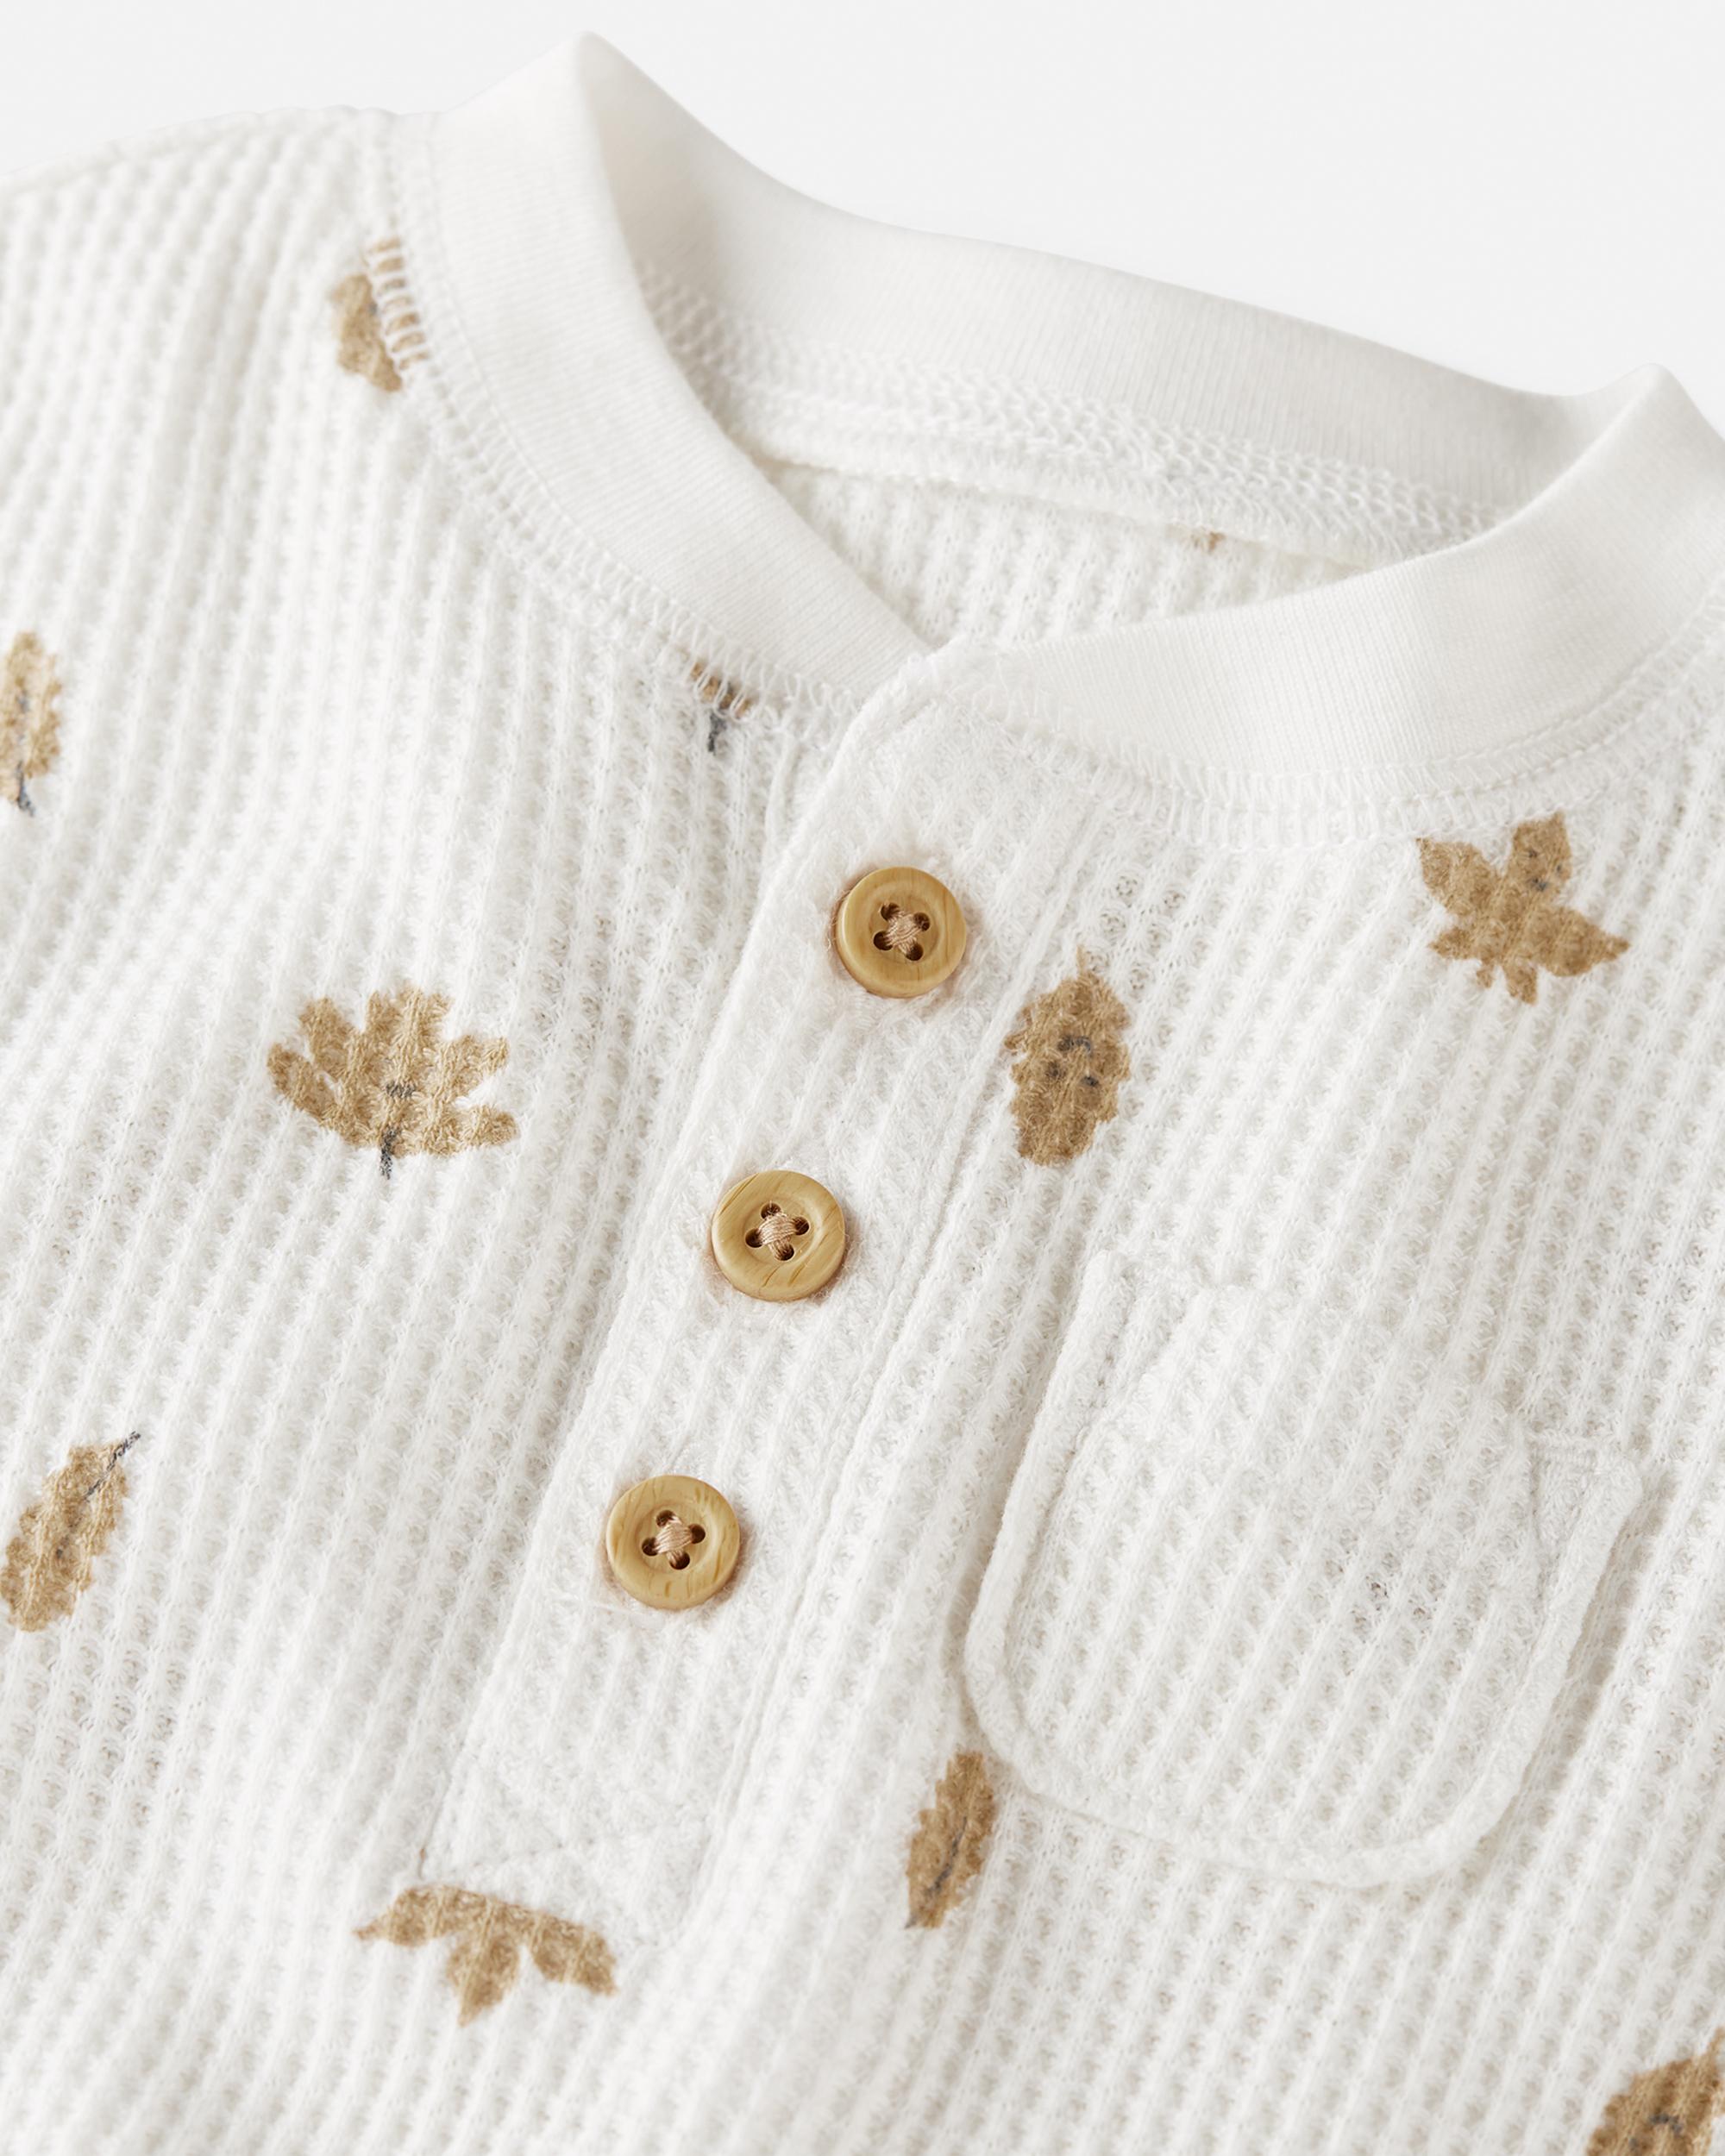 EVA T-SHIRT ONYX : organic cotton jersey knit : Rafaiel Knitwear NYC